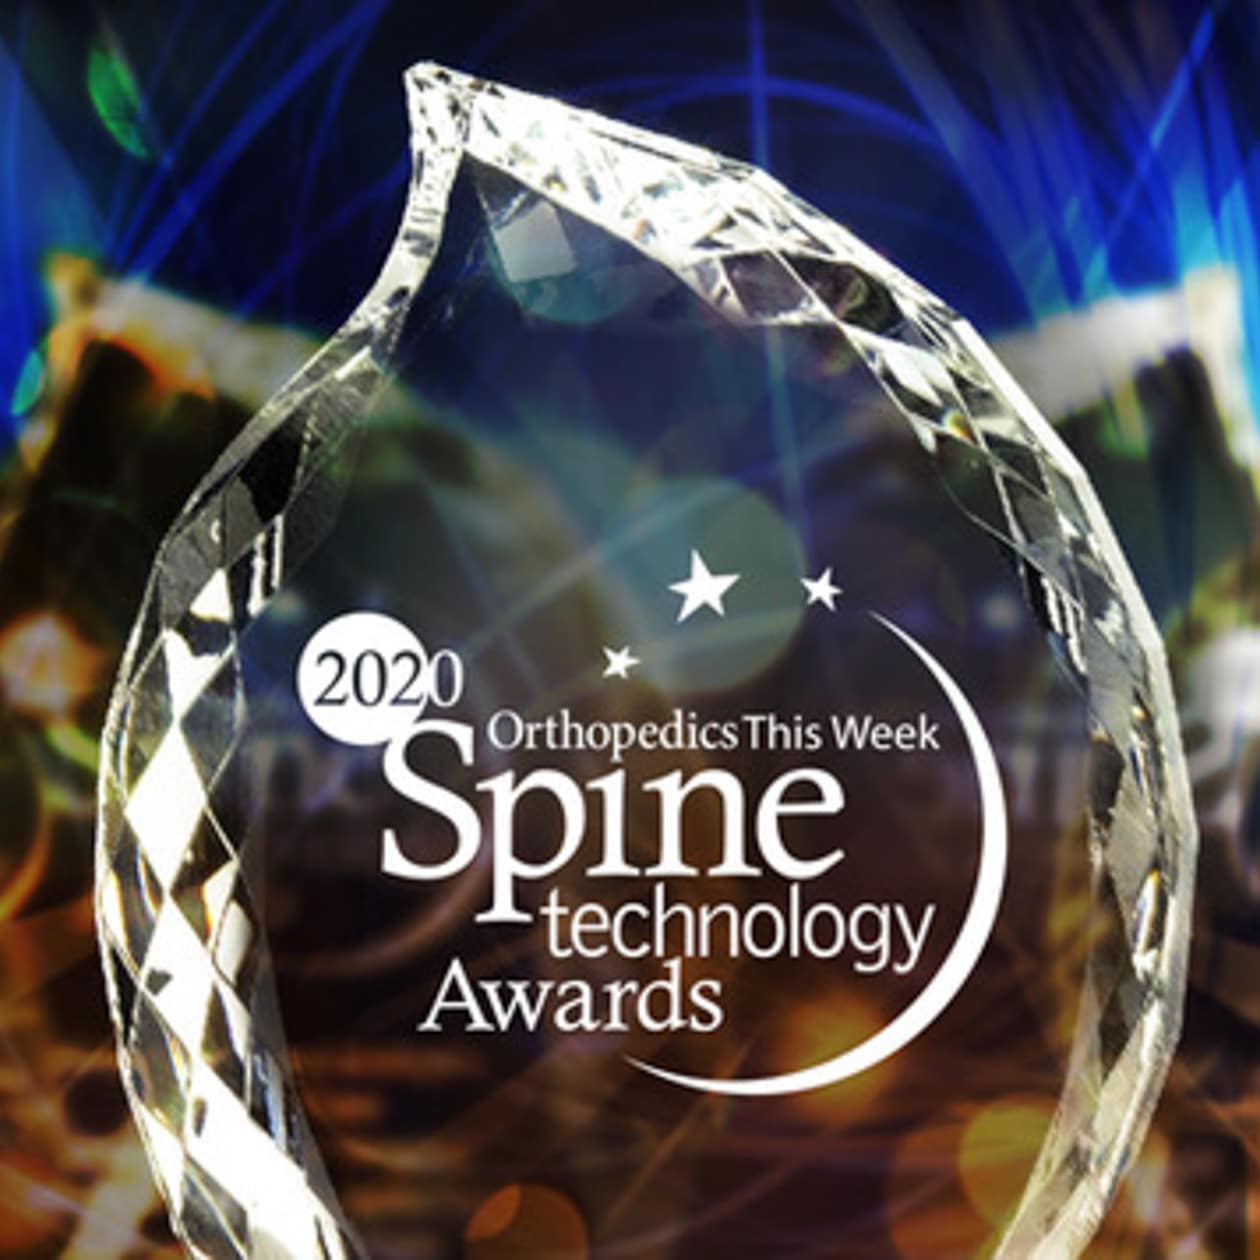 Spine technology award